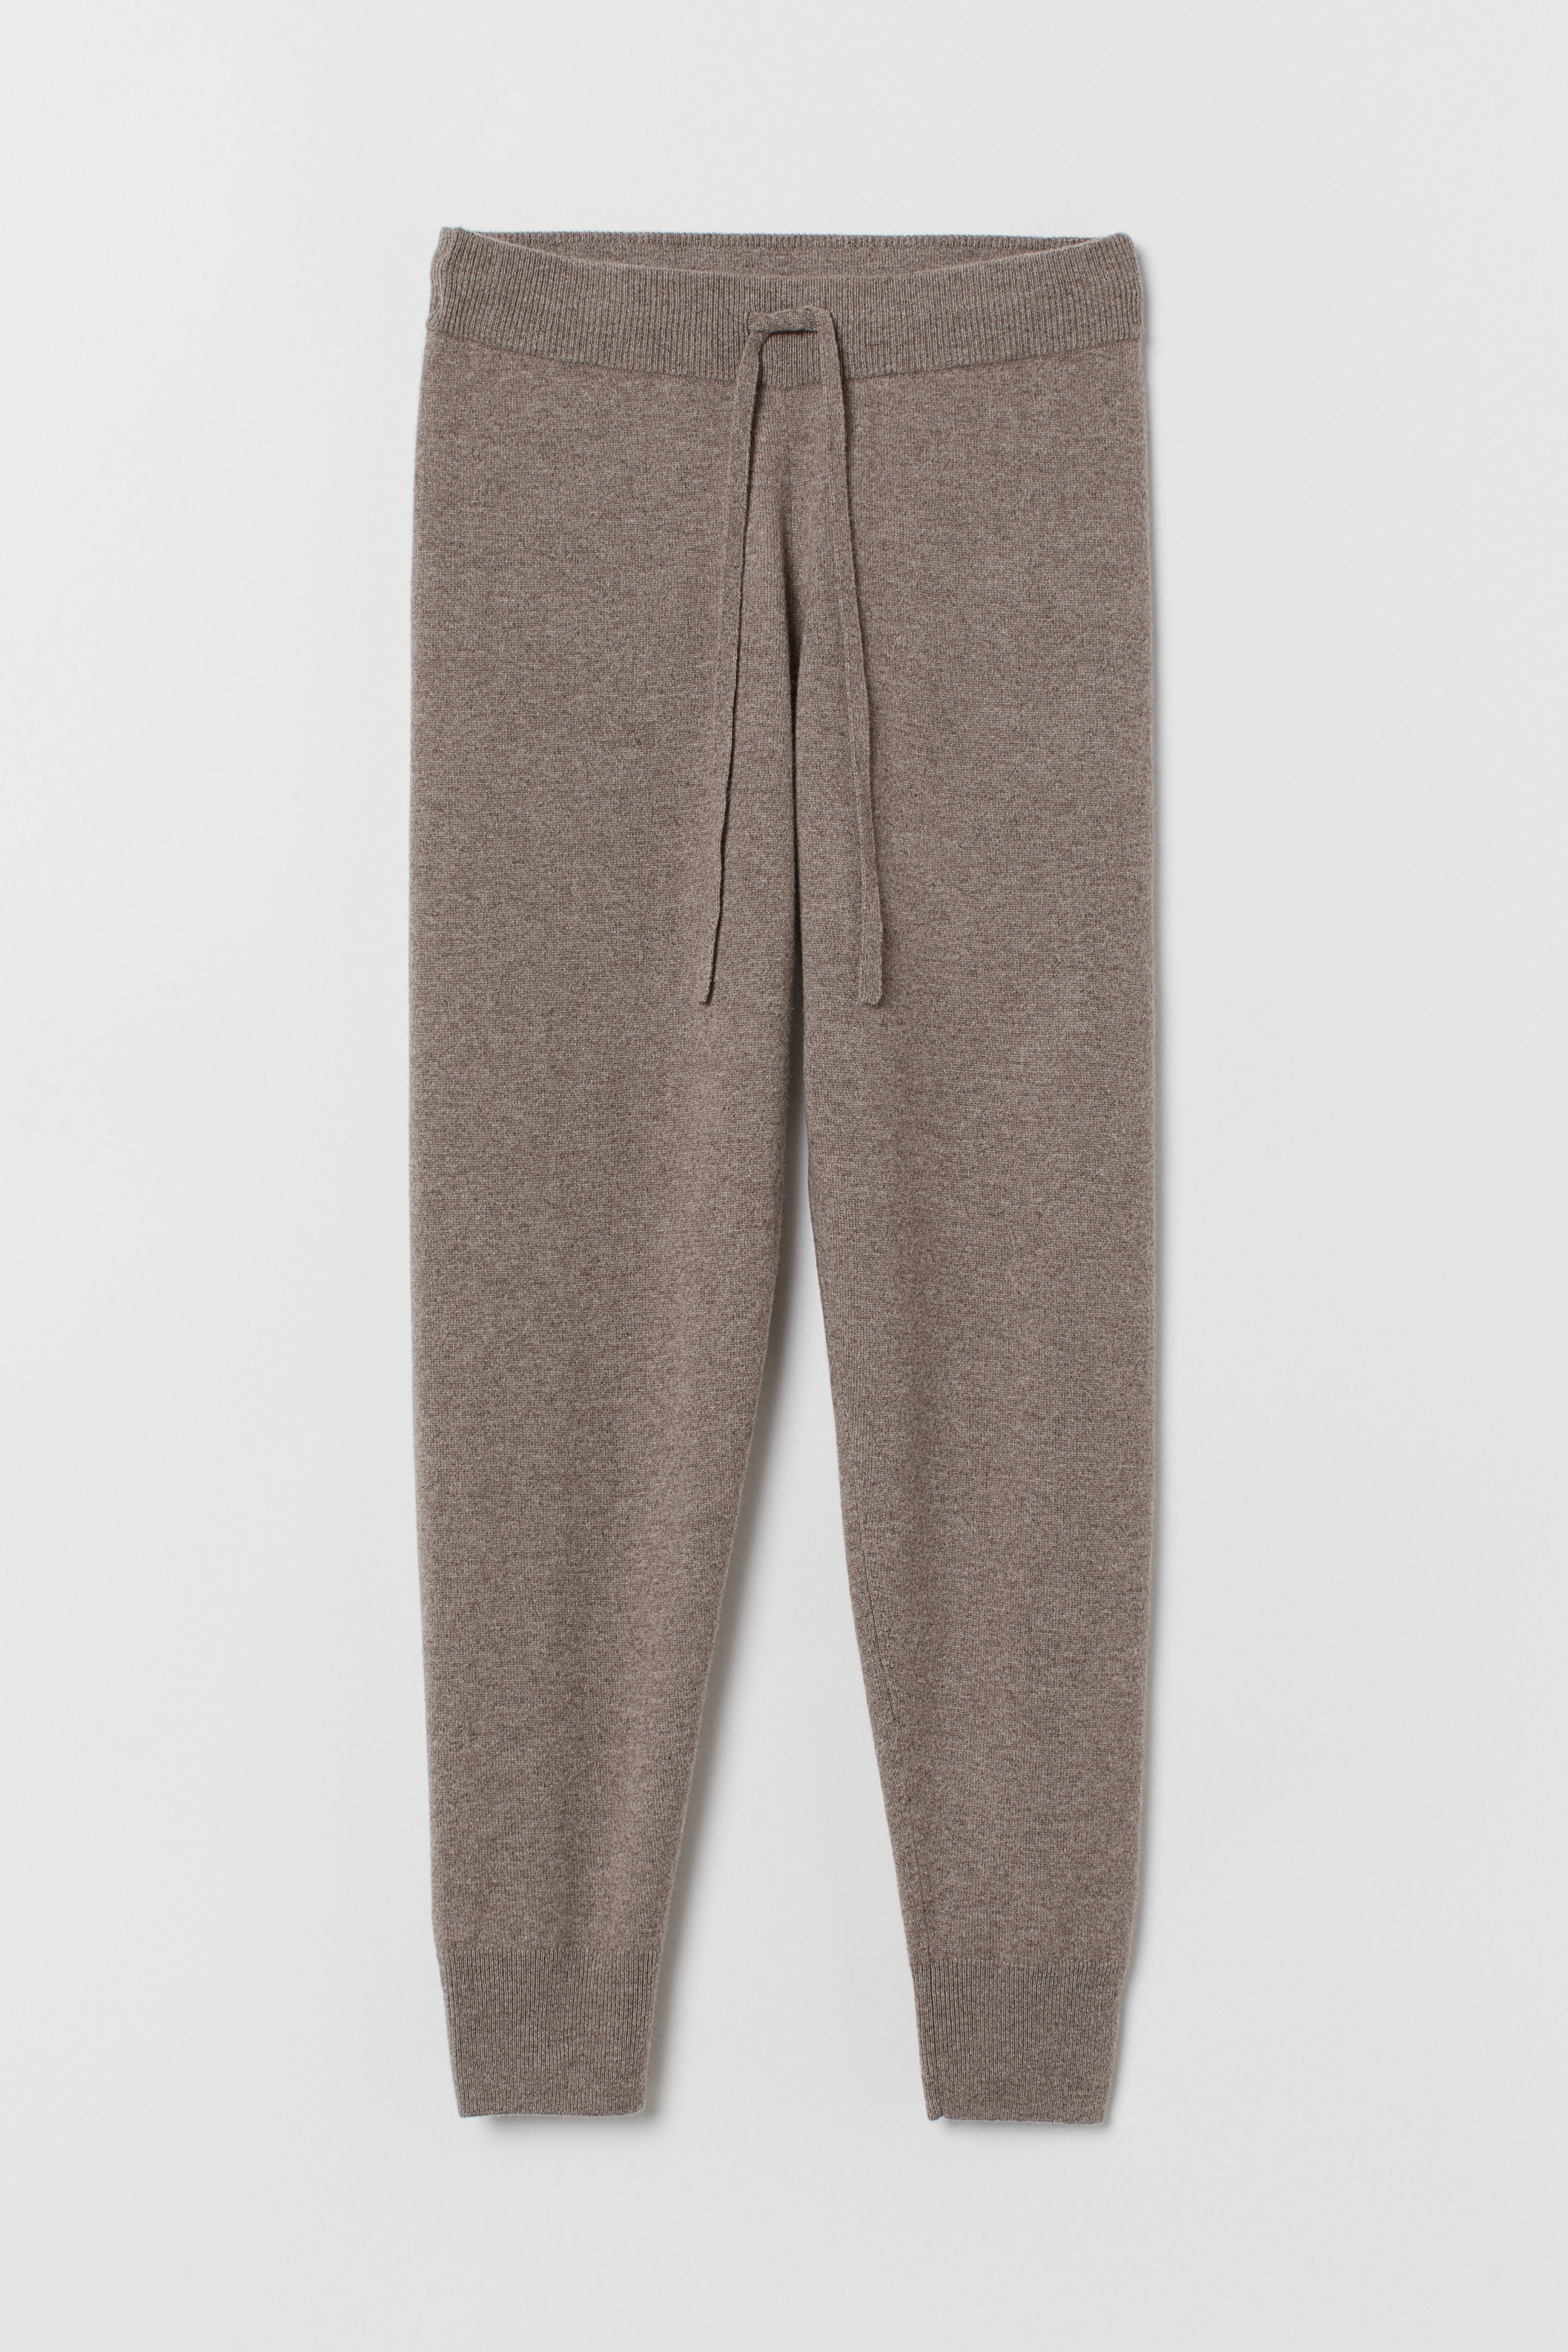 Cashmere Sweatpants That Are Worth the Splurge